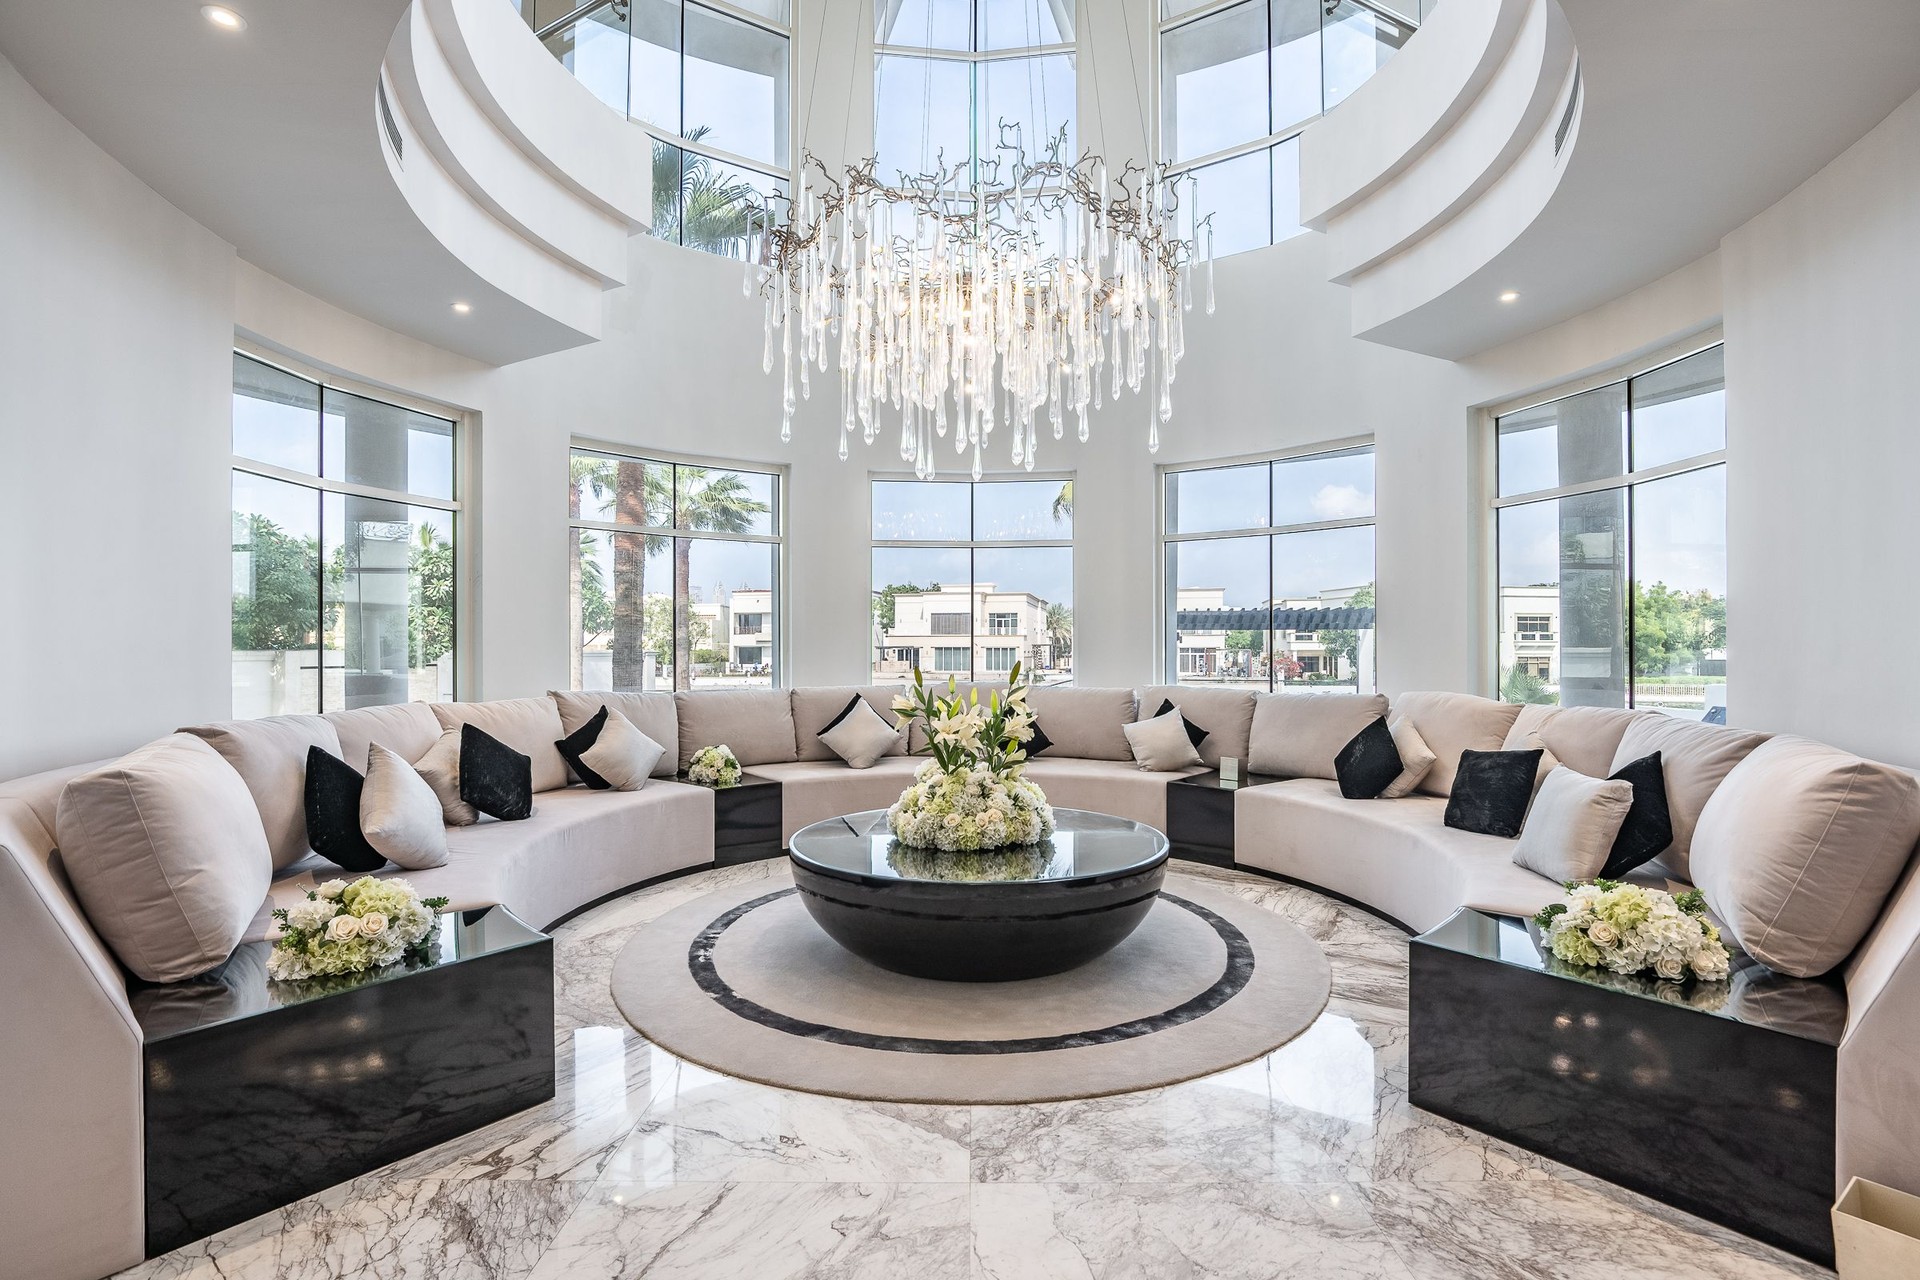 Bespoke Luxury Villa with Lake Views in Emirates Hills: Image 1